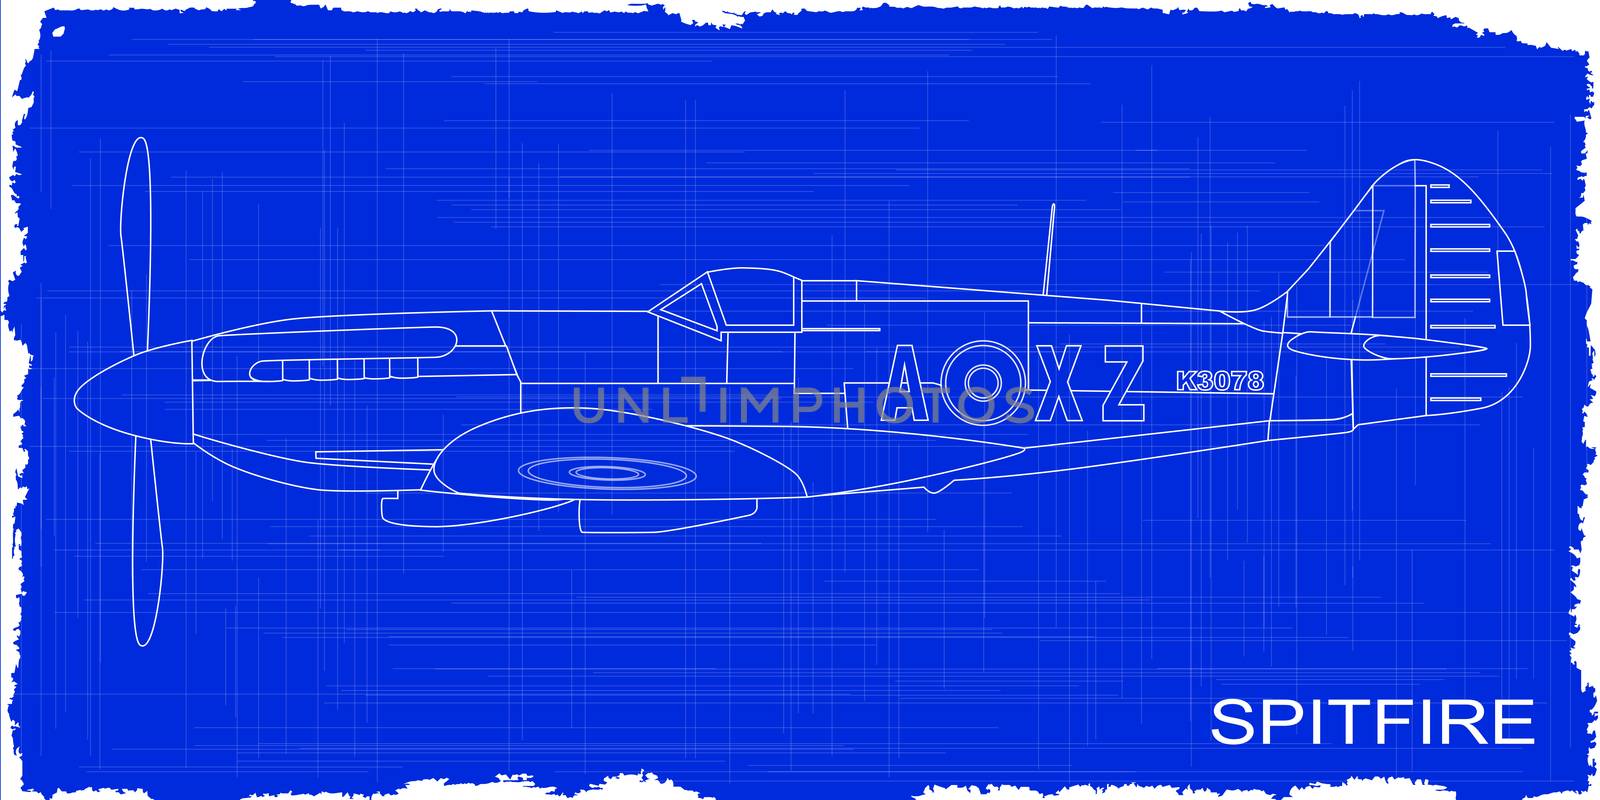 Fighter Plane Blueprint by Bigalbaloo